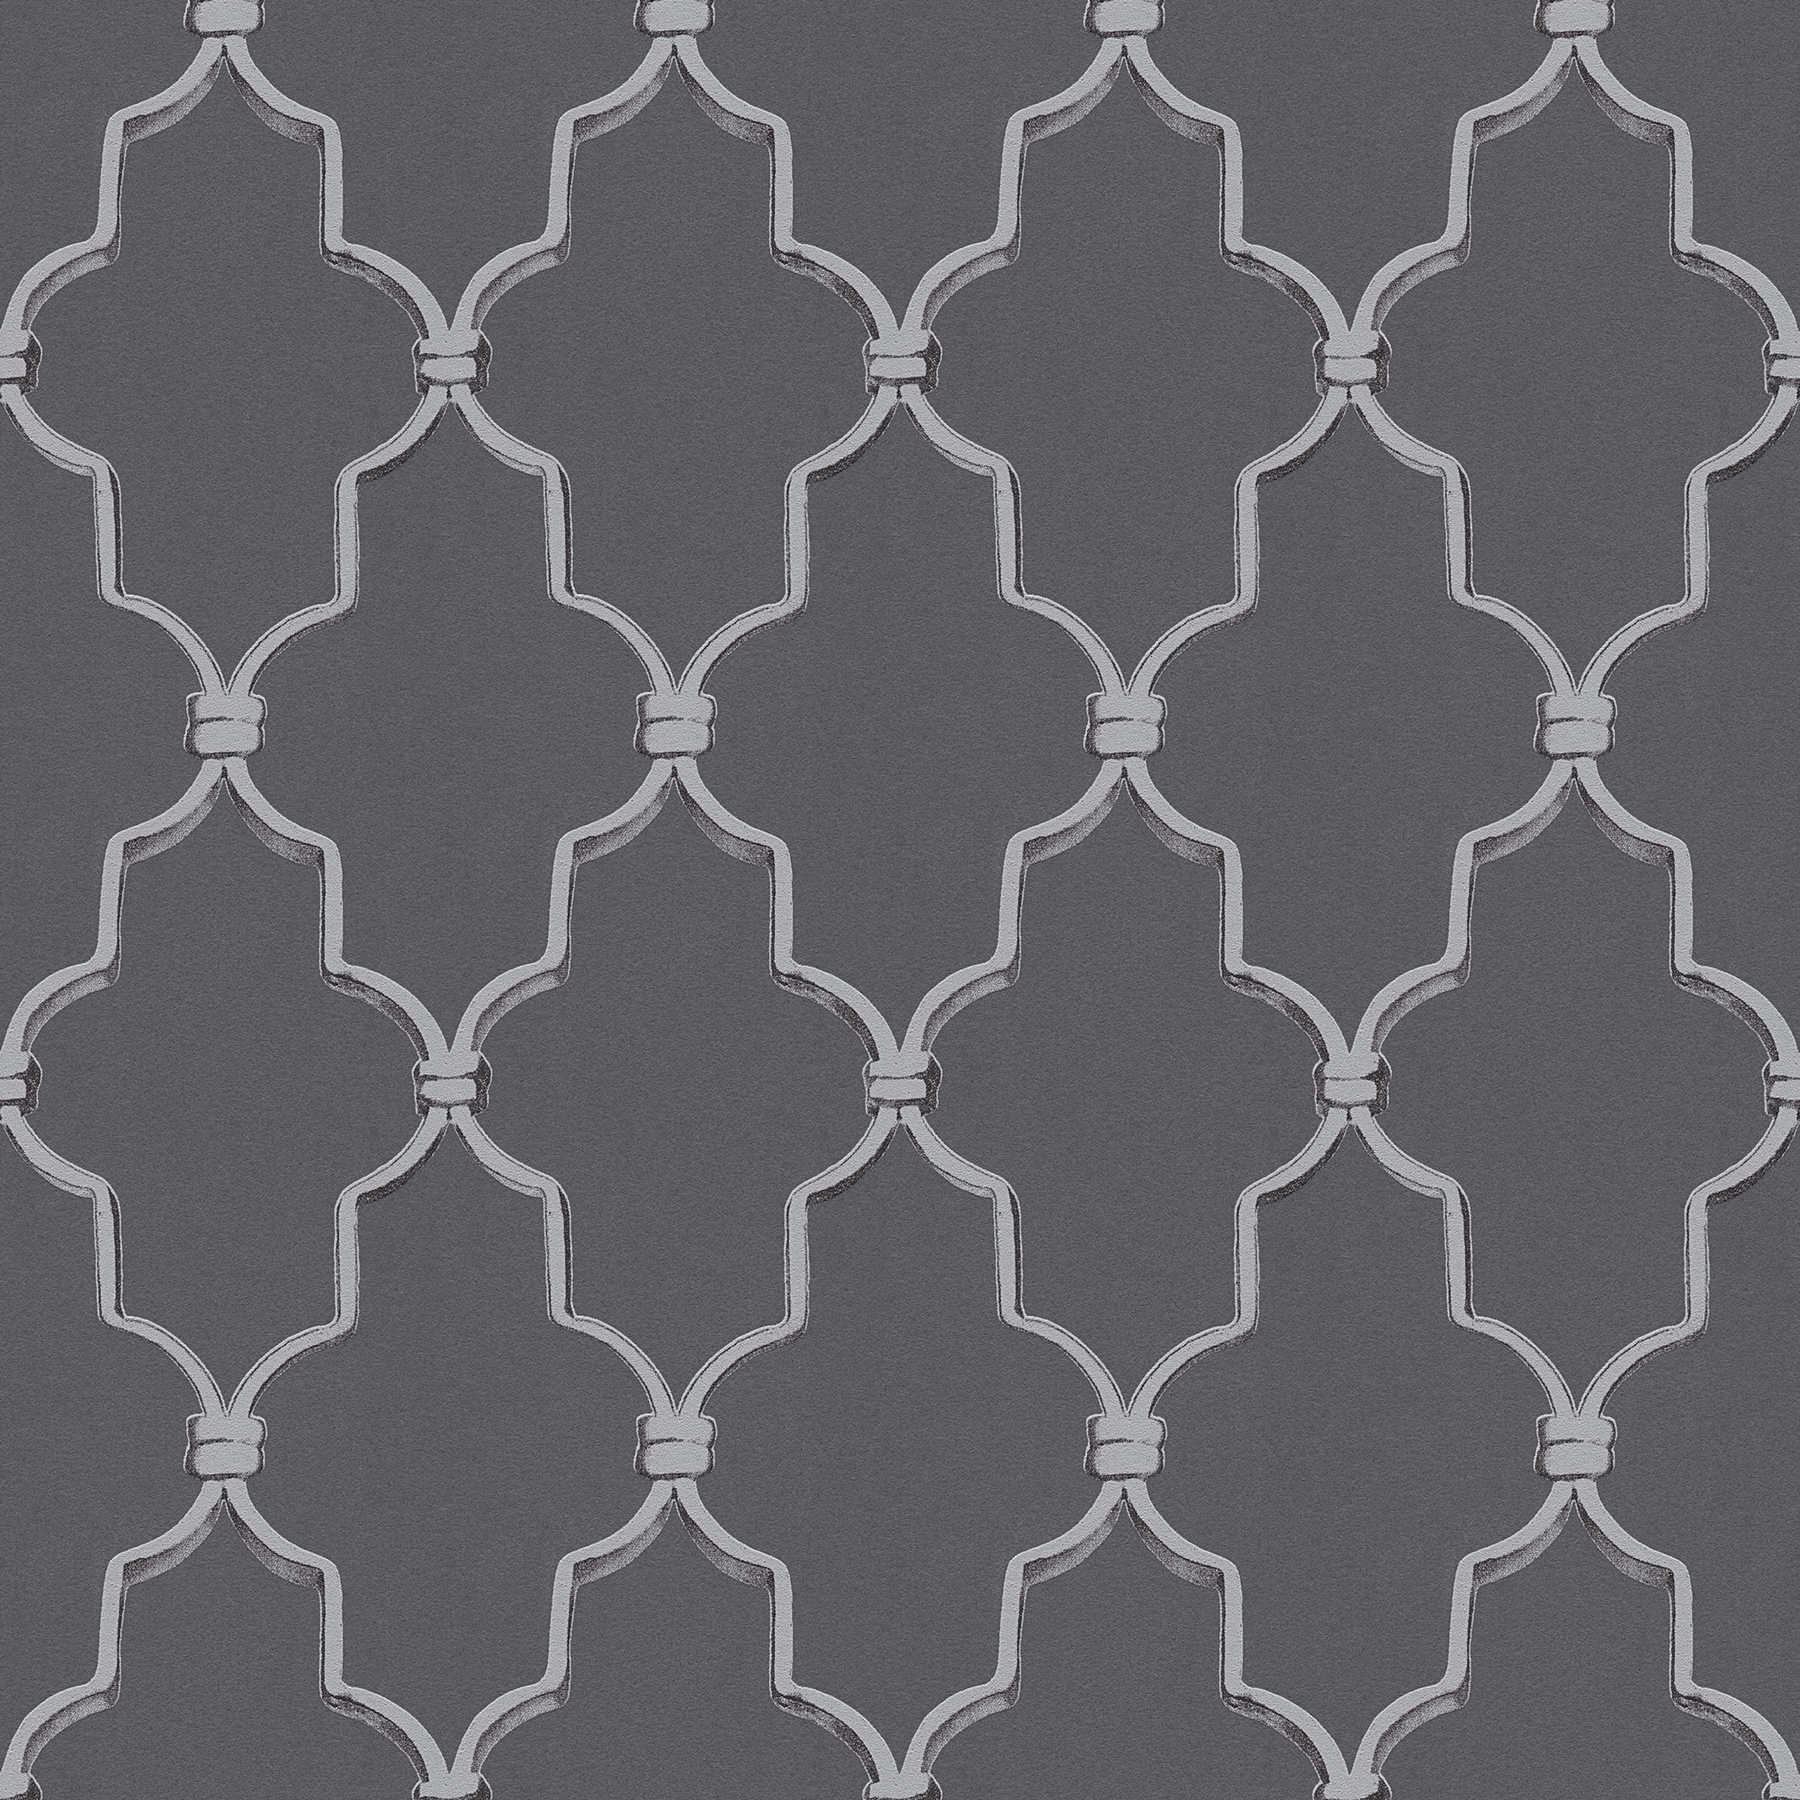 Art deco wallpaper with metallic pattern in retro style - grey
